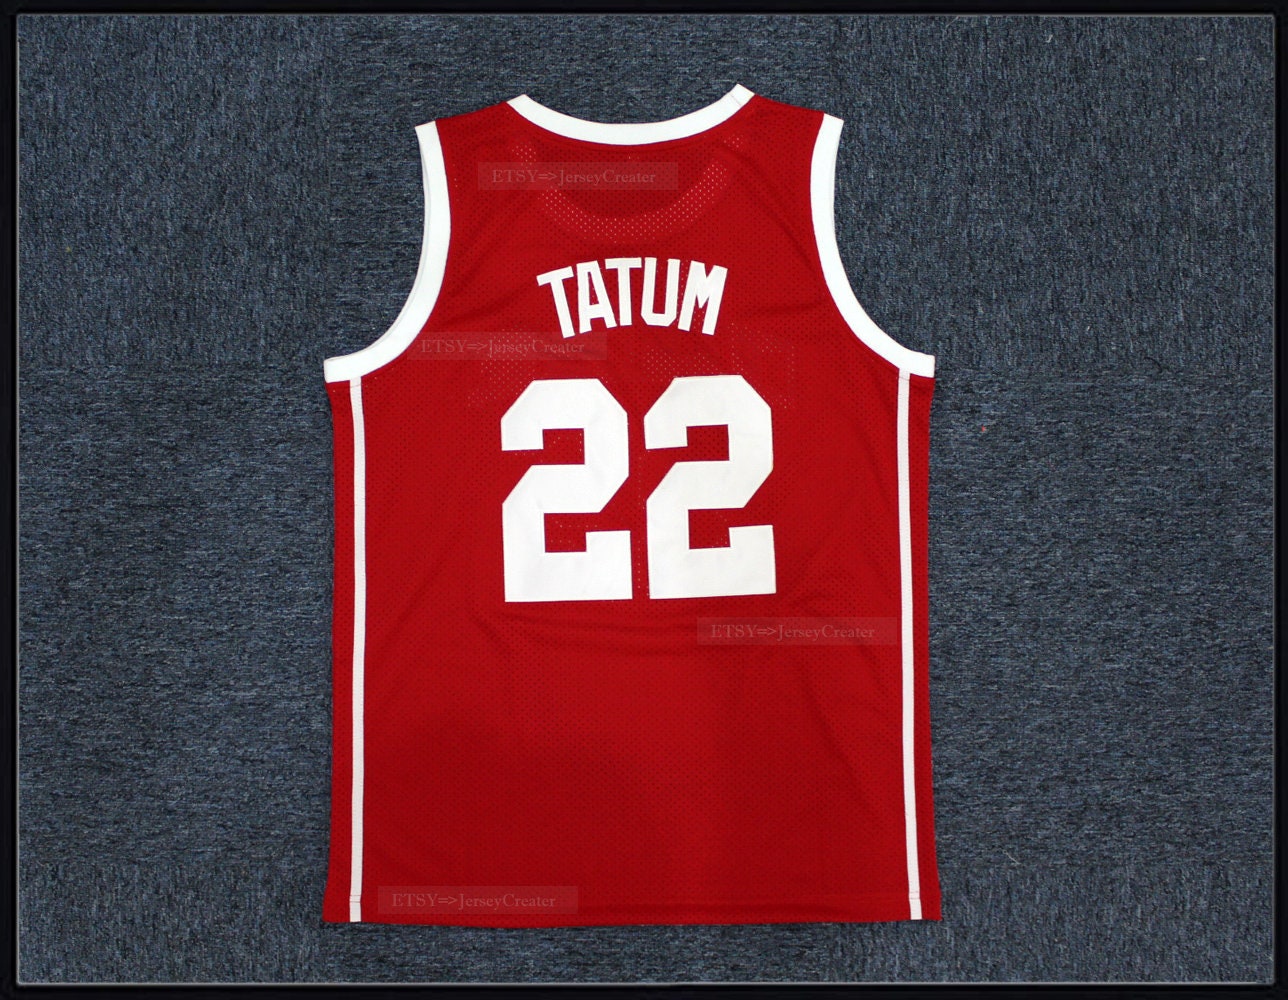 JerseyCreater China Jeremy Lin #7 Beijing Ducks Basketball Jerseys Top Printed Custom Names